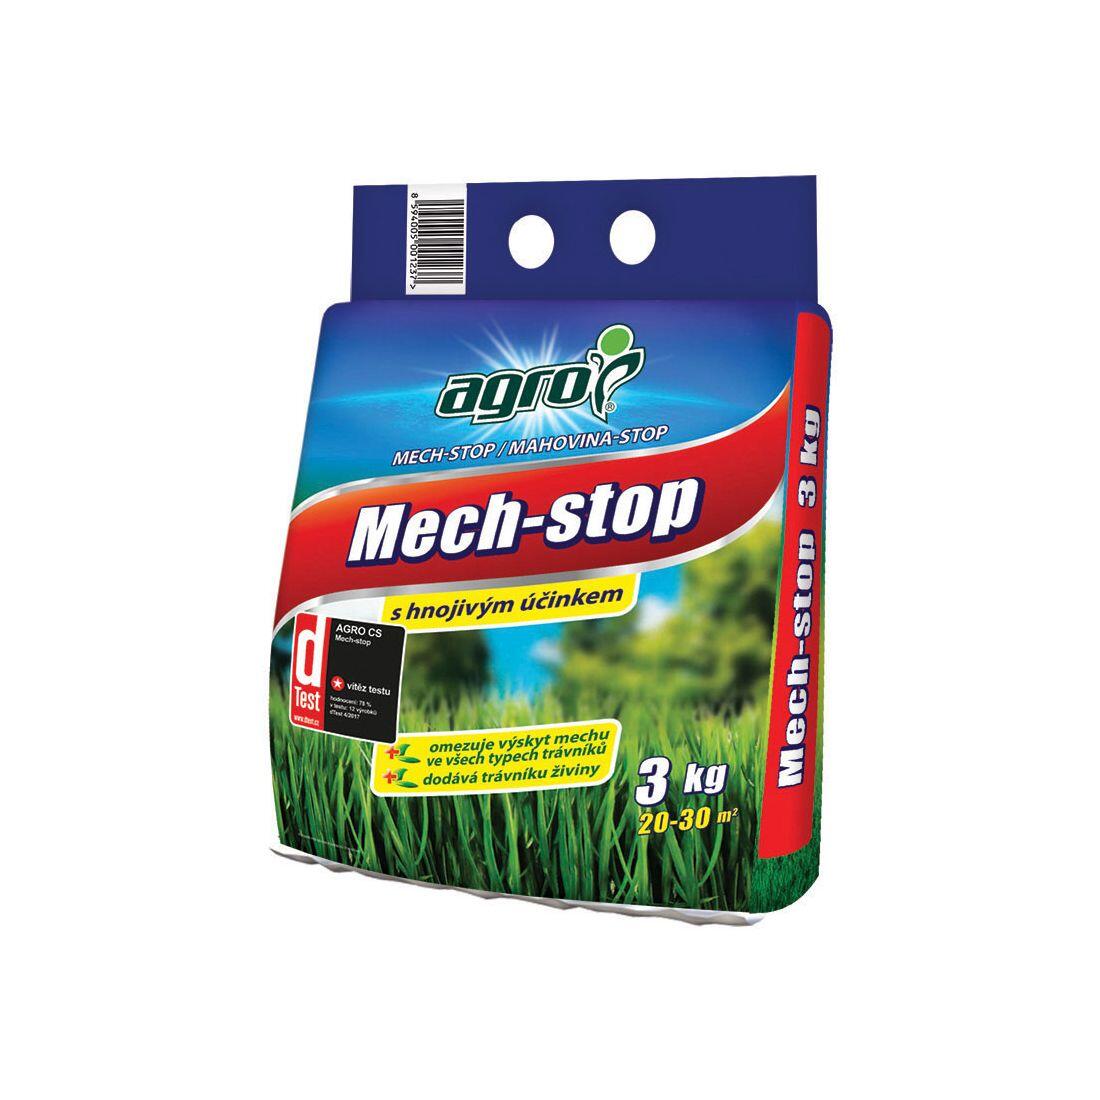 Mech-stop sáček s uchem 3kg AGRO 3.03 Kg MAXMIX Sklad14 912599 169